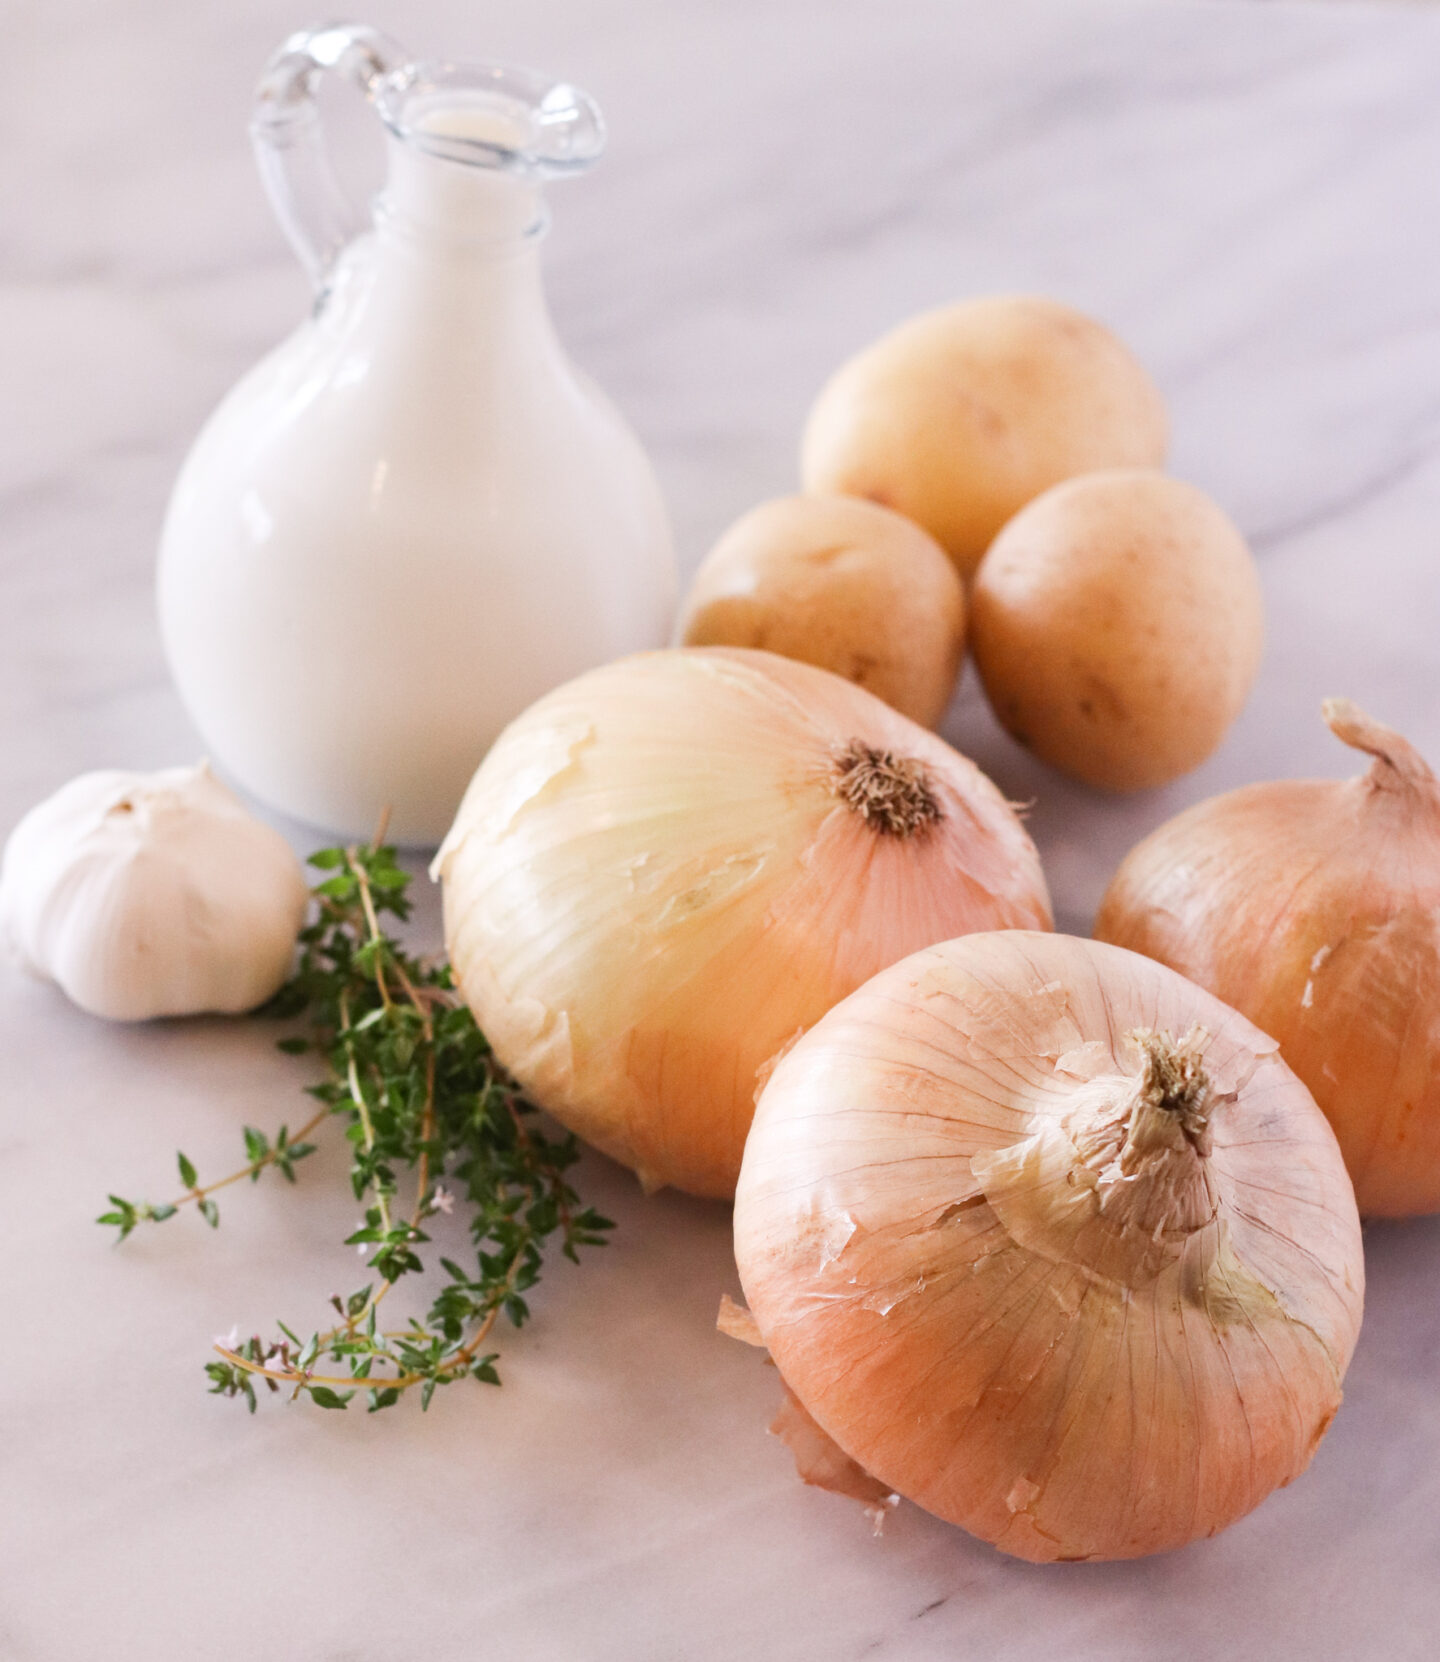 Vidalia Onions and Potato Au Gratin